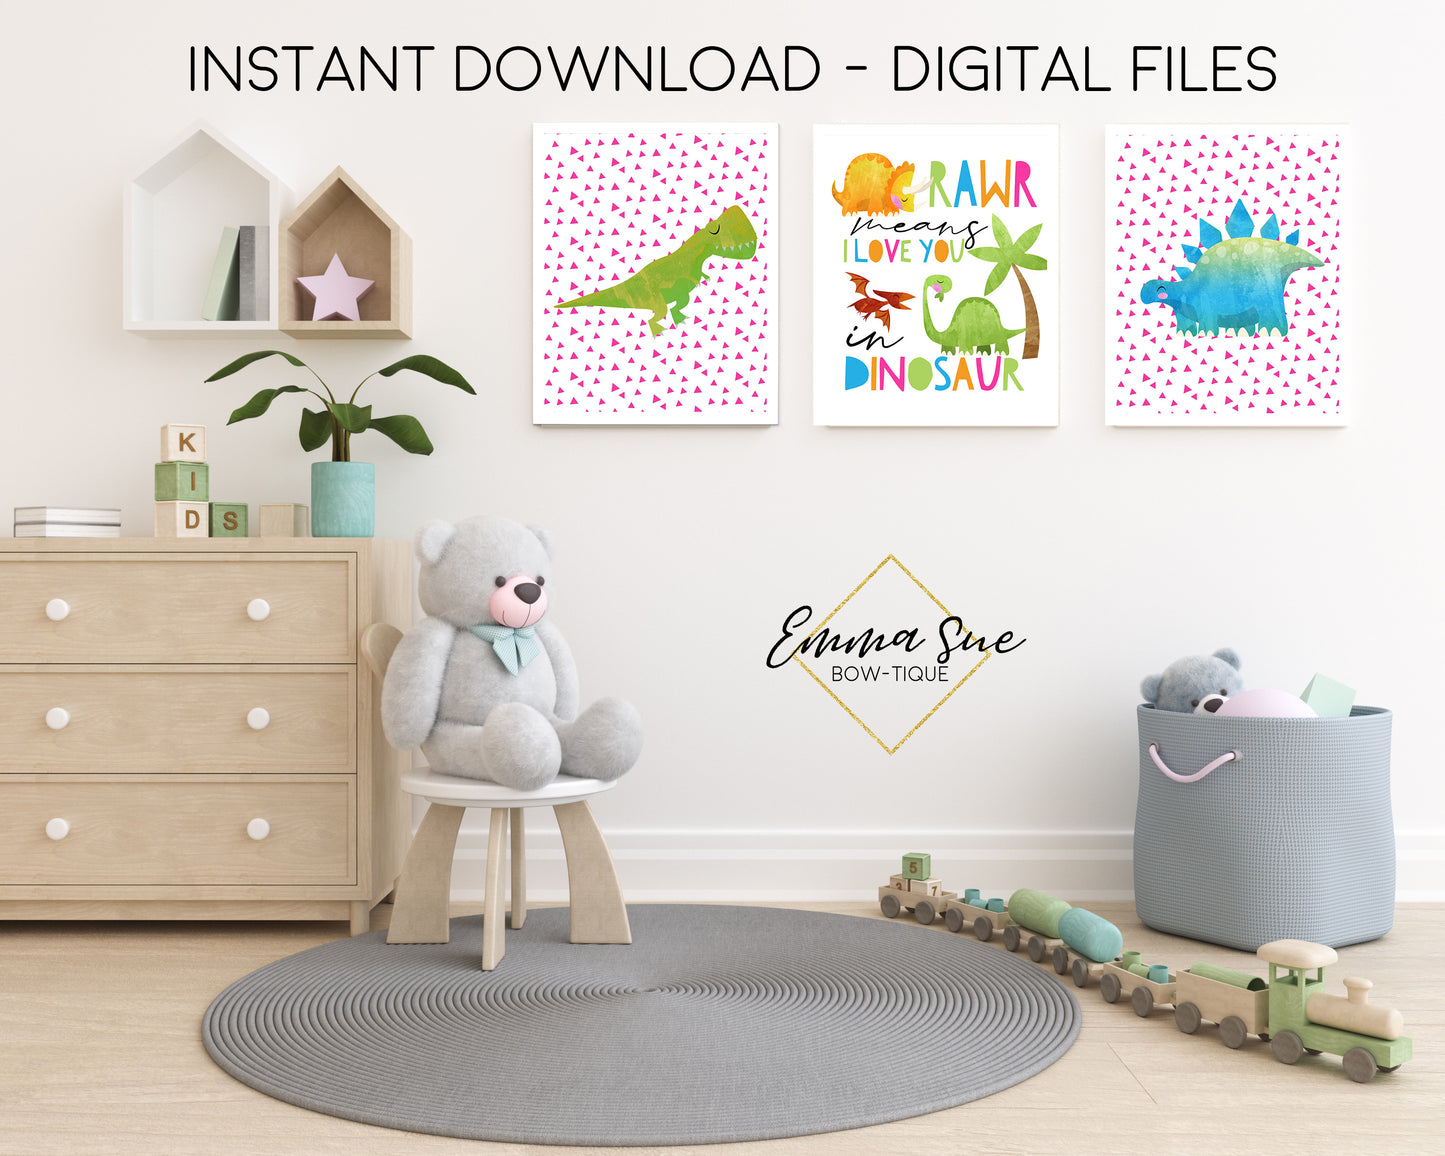 Rawr Means I Love You in Dinosaur Girl's Watercolor Set - Kid's Room Or Baby Nursery Printable Wall Art  - Digital File